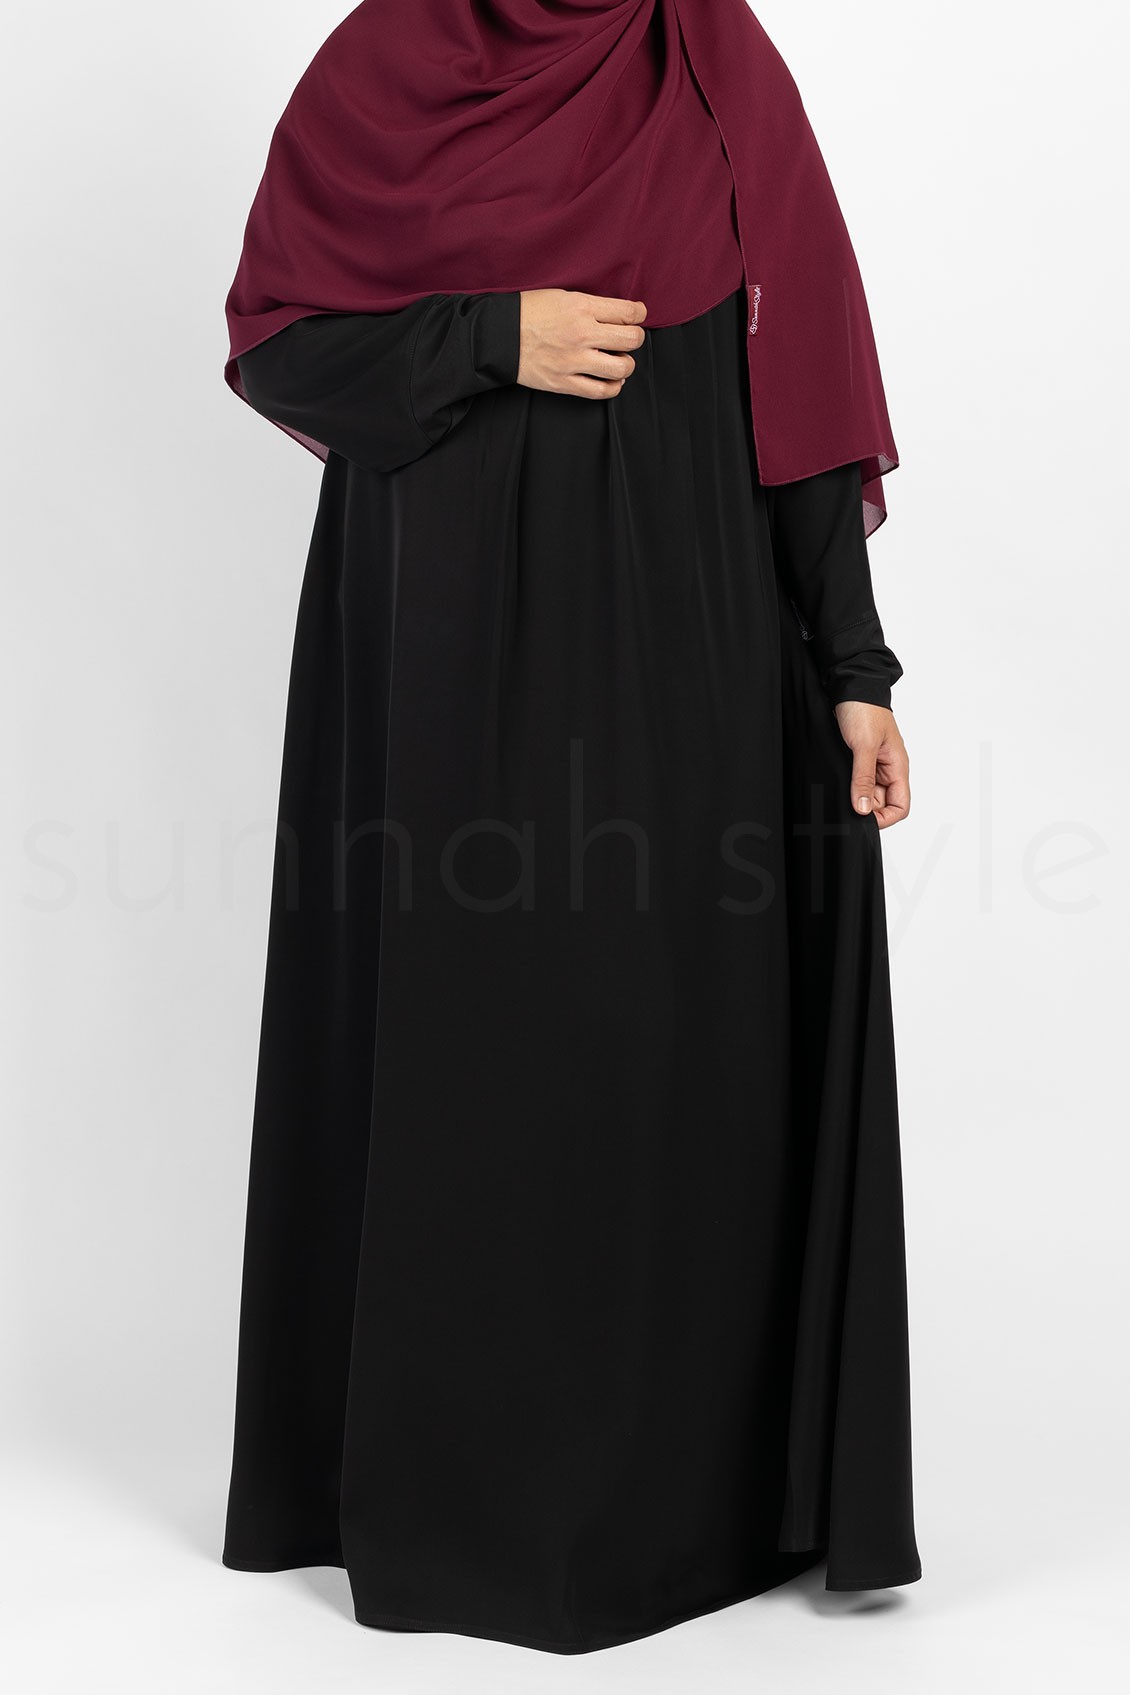 Simplicity Umbrella Abaya (Black)